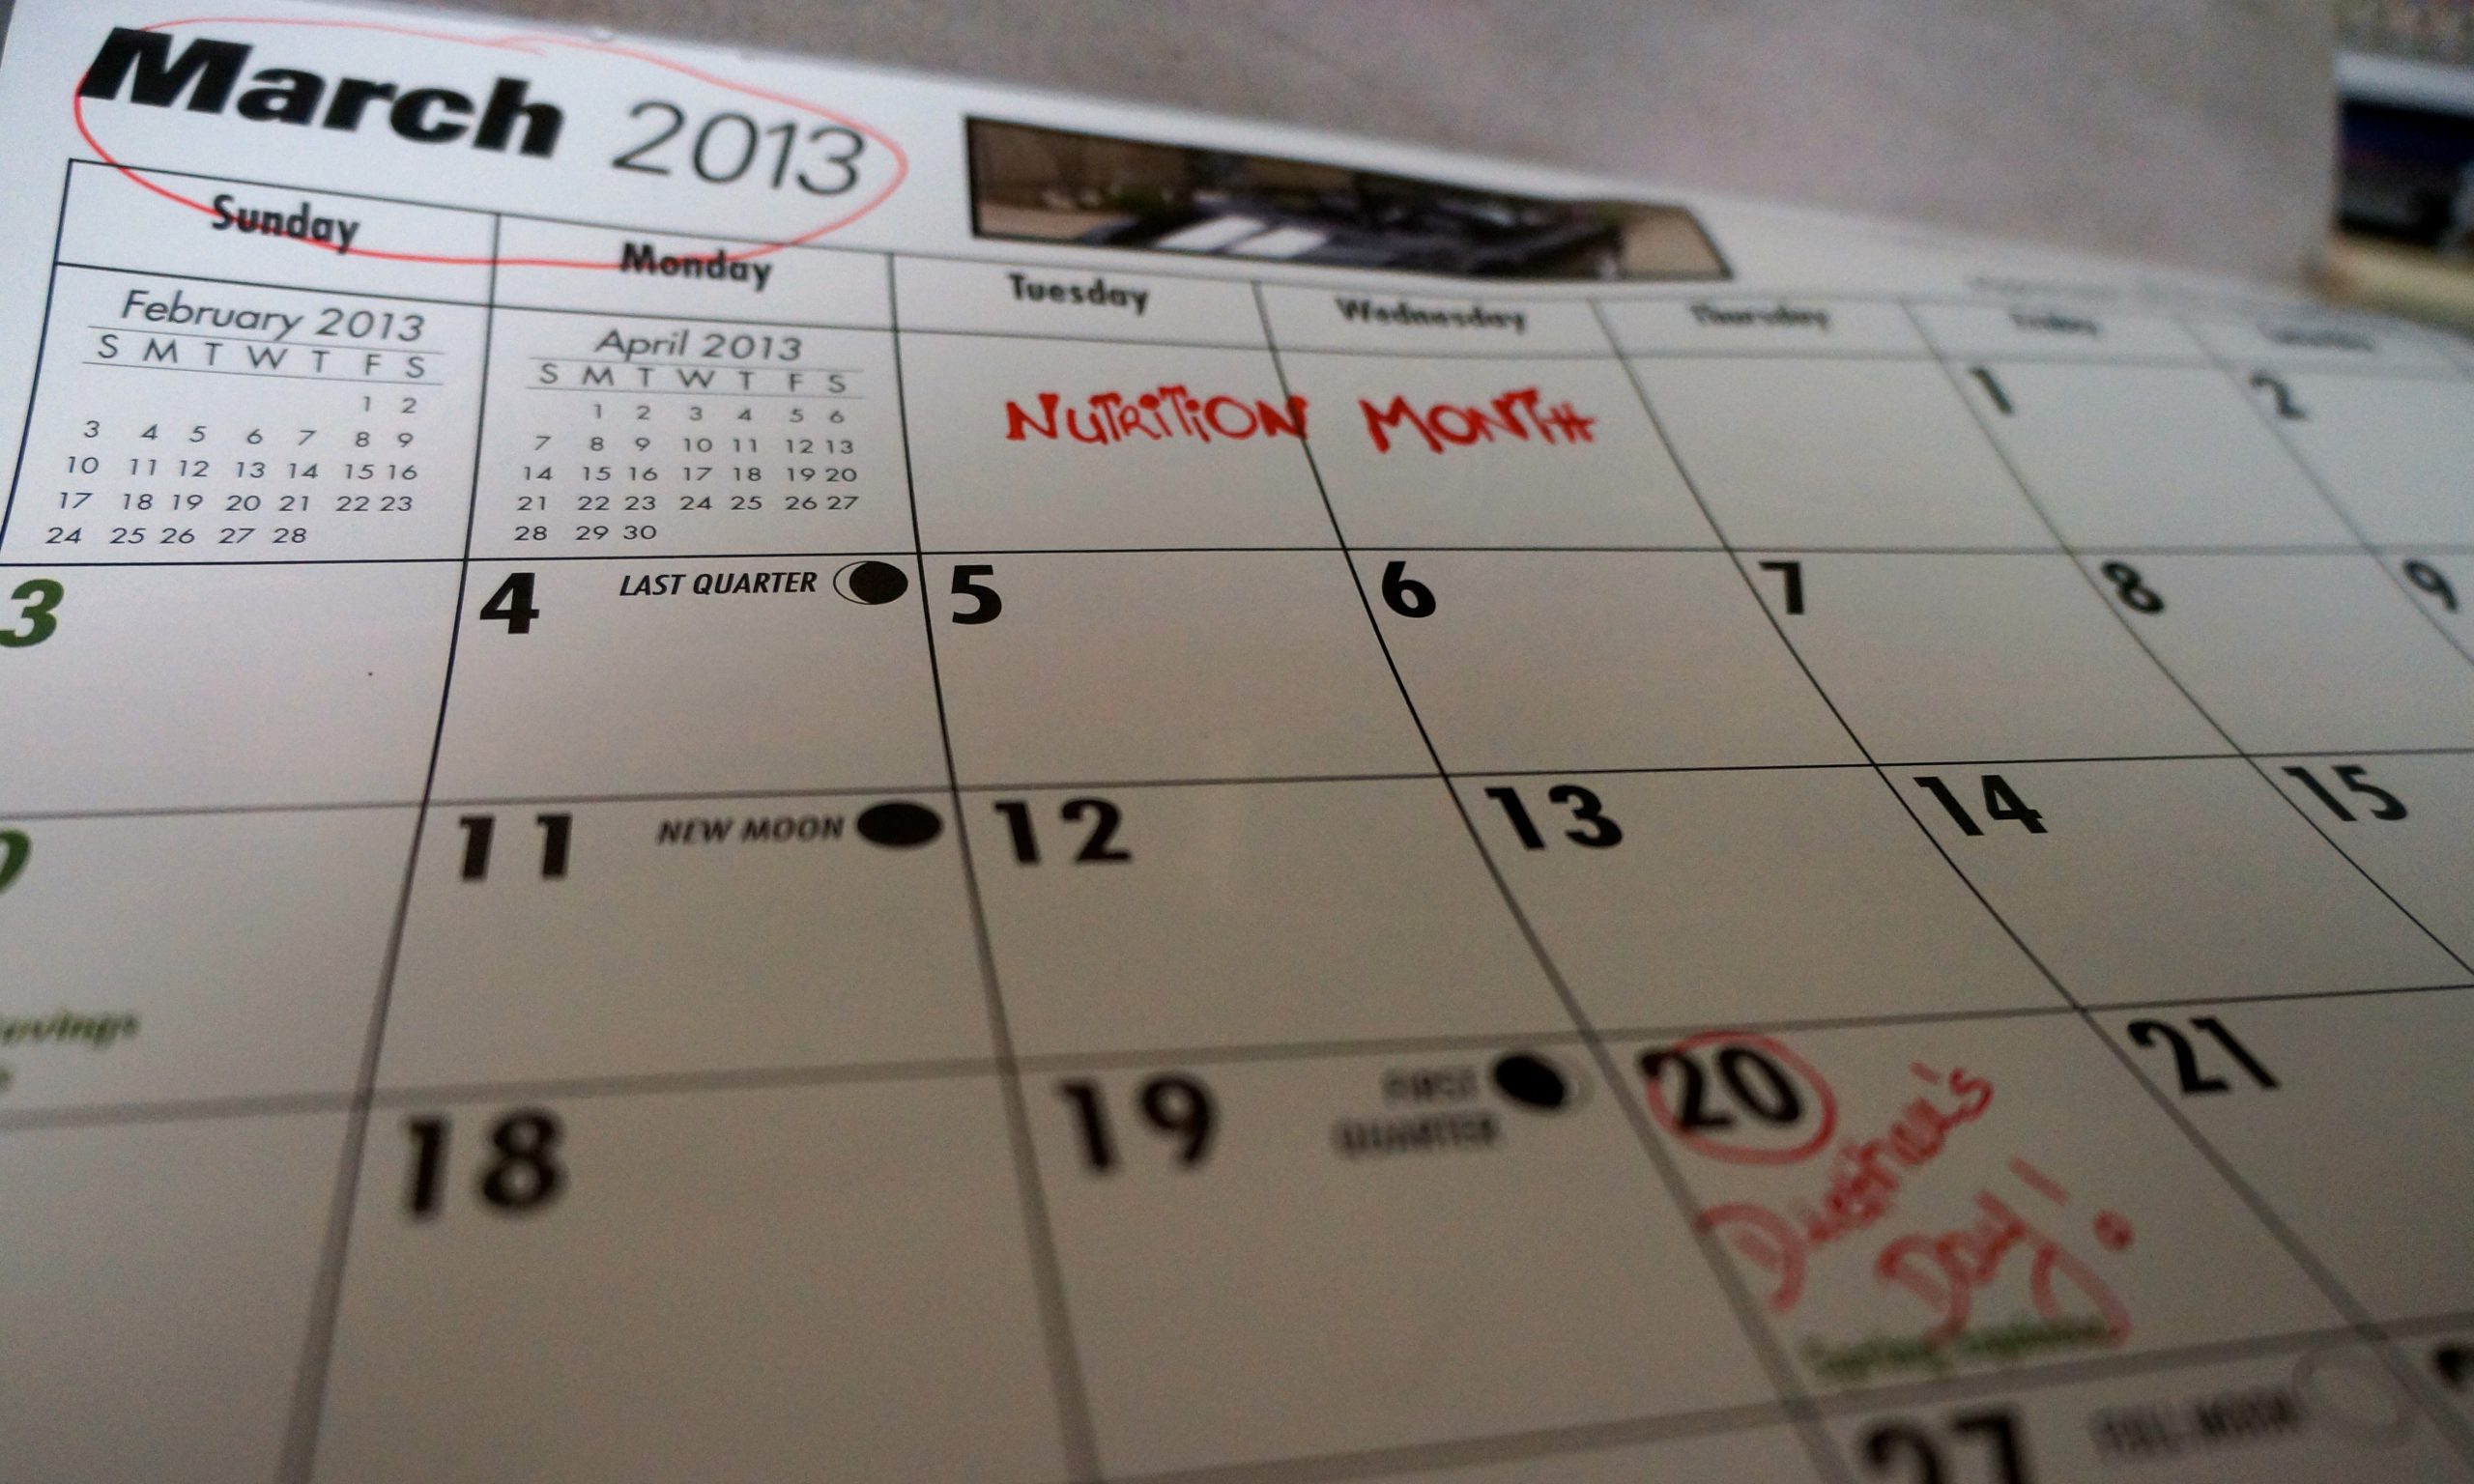 March calendar, nutrition month, health, wellness, nutrition